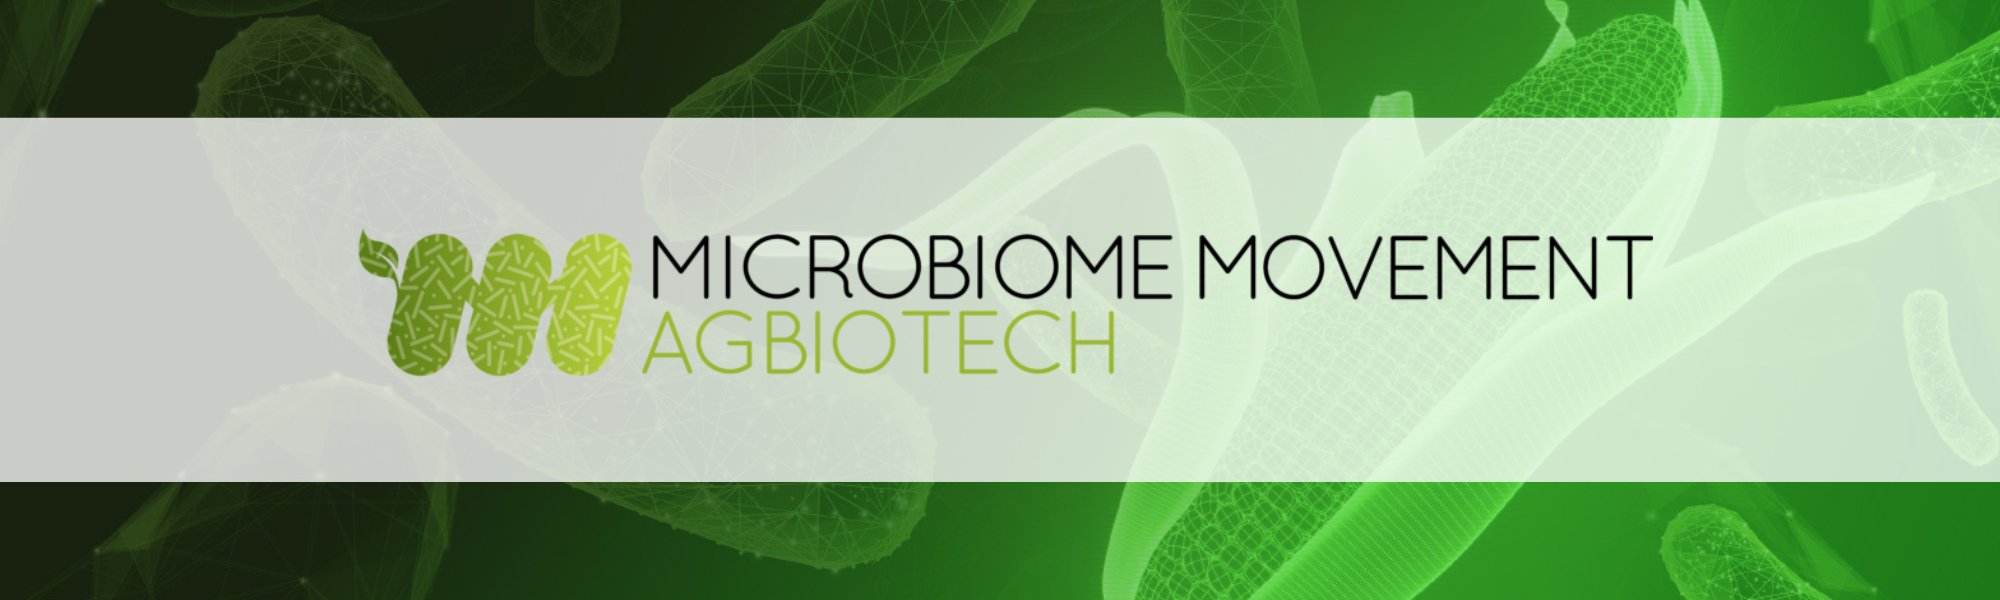 Microbiome - mew